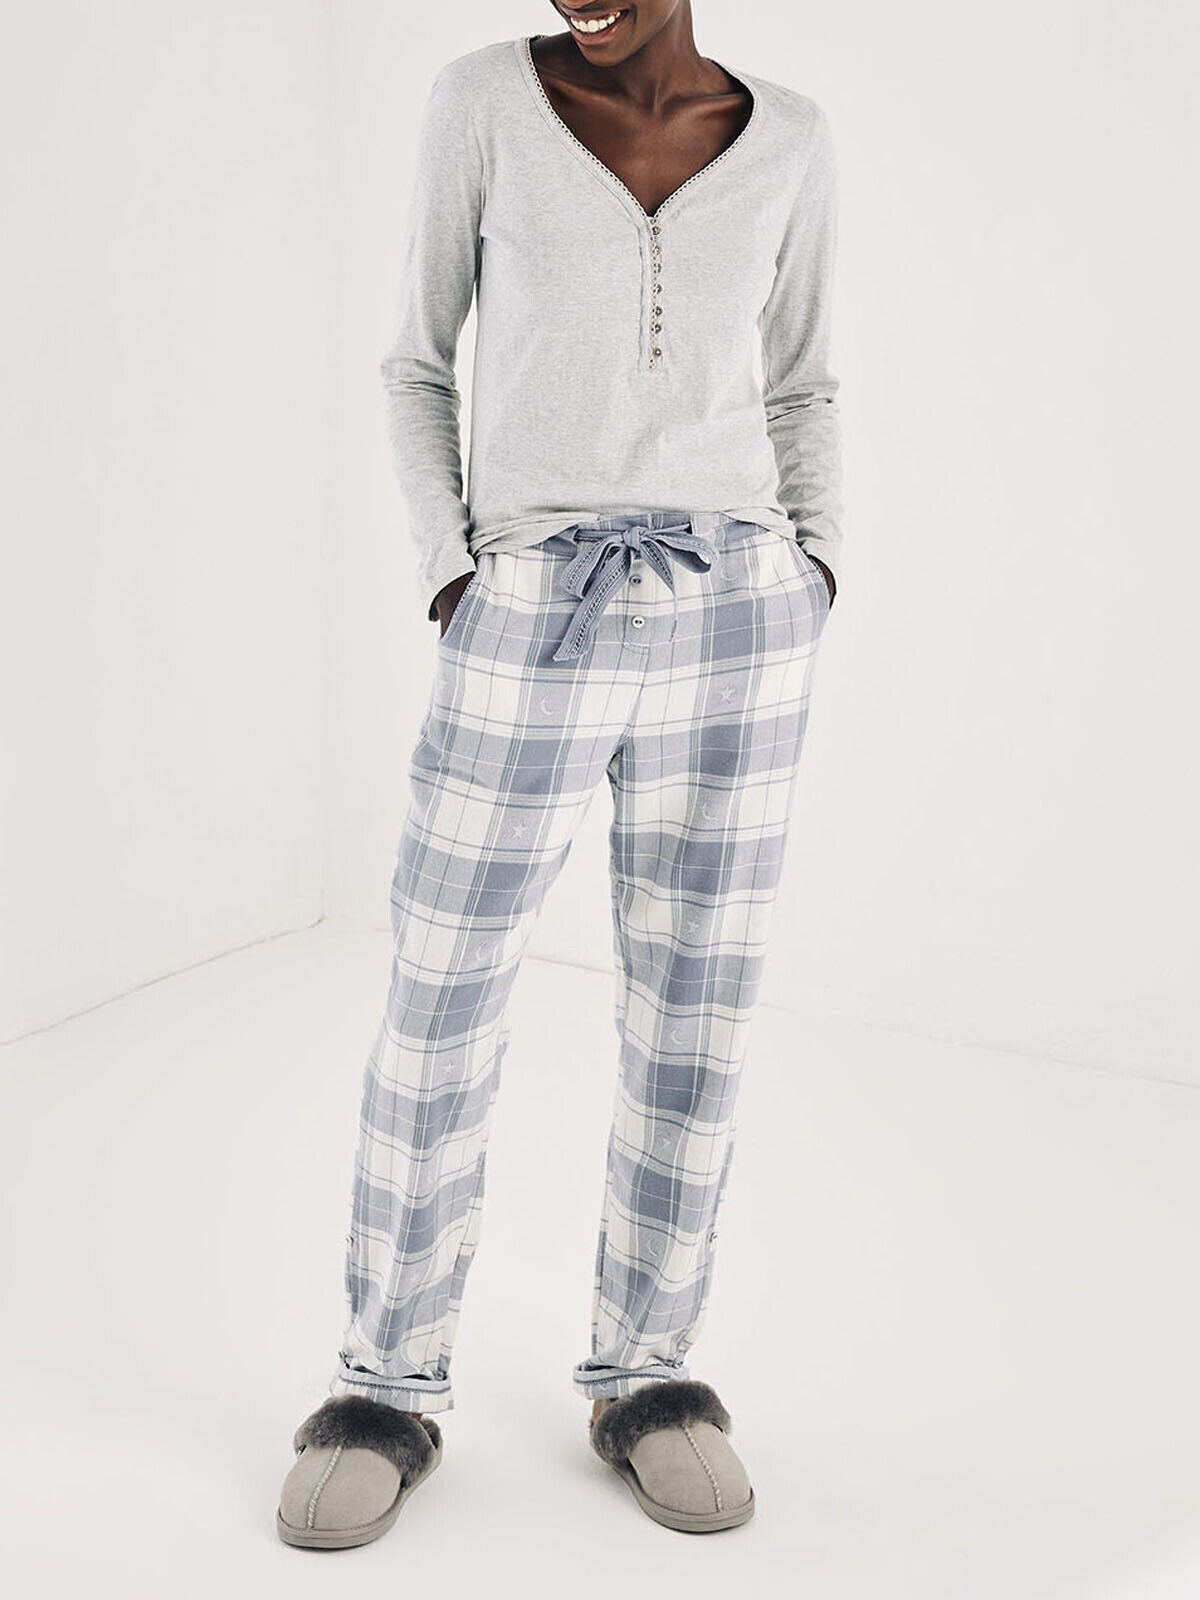 EX Fat Face Pale Blue Eva Moon Pyjama Lounge Pants 10, 12, 14, 16, 18, 22, 24